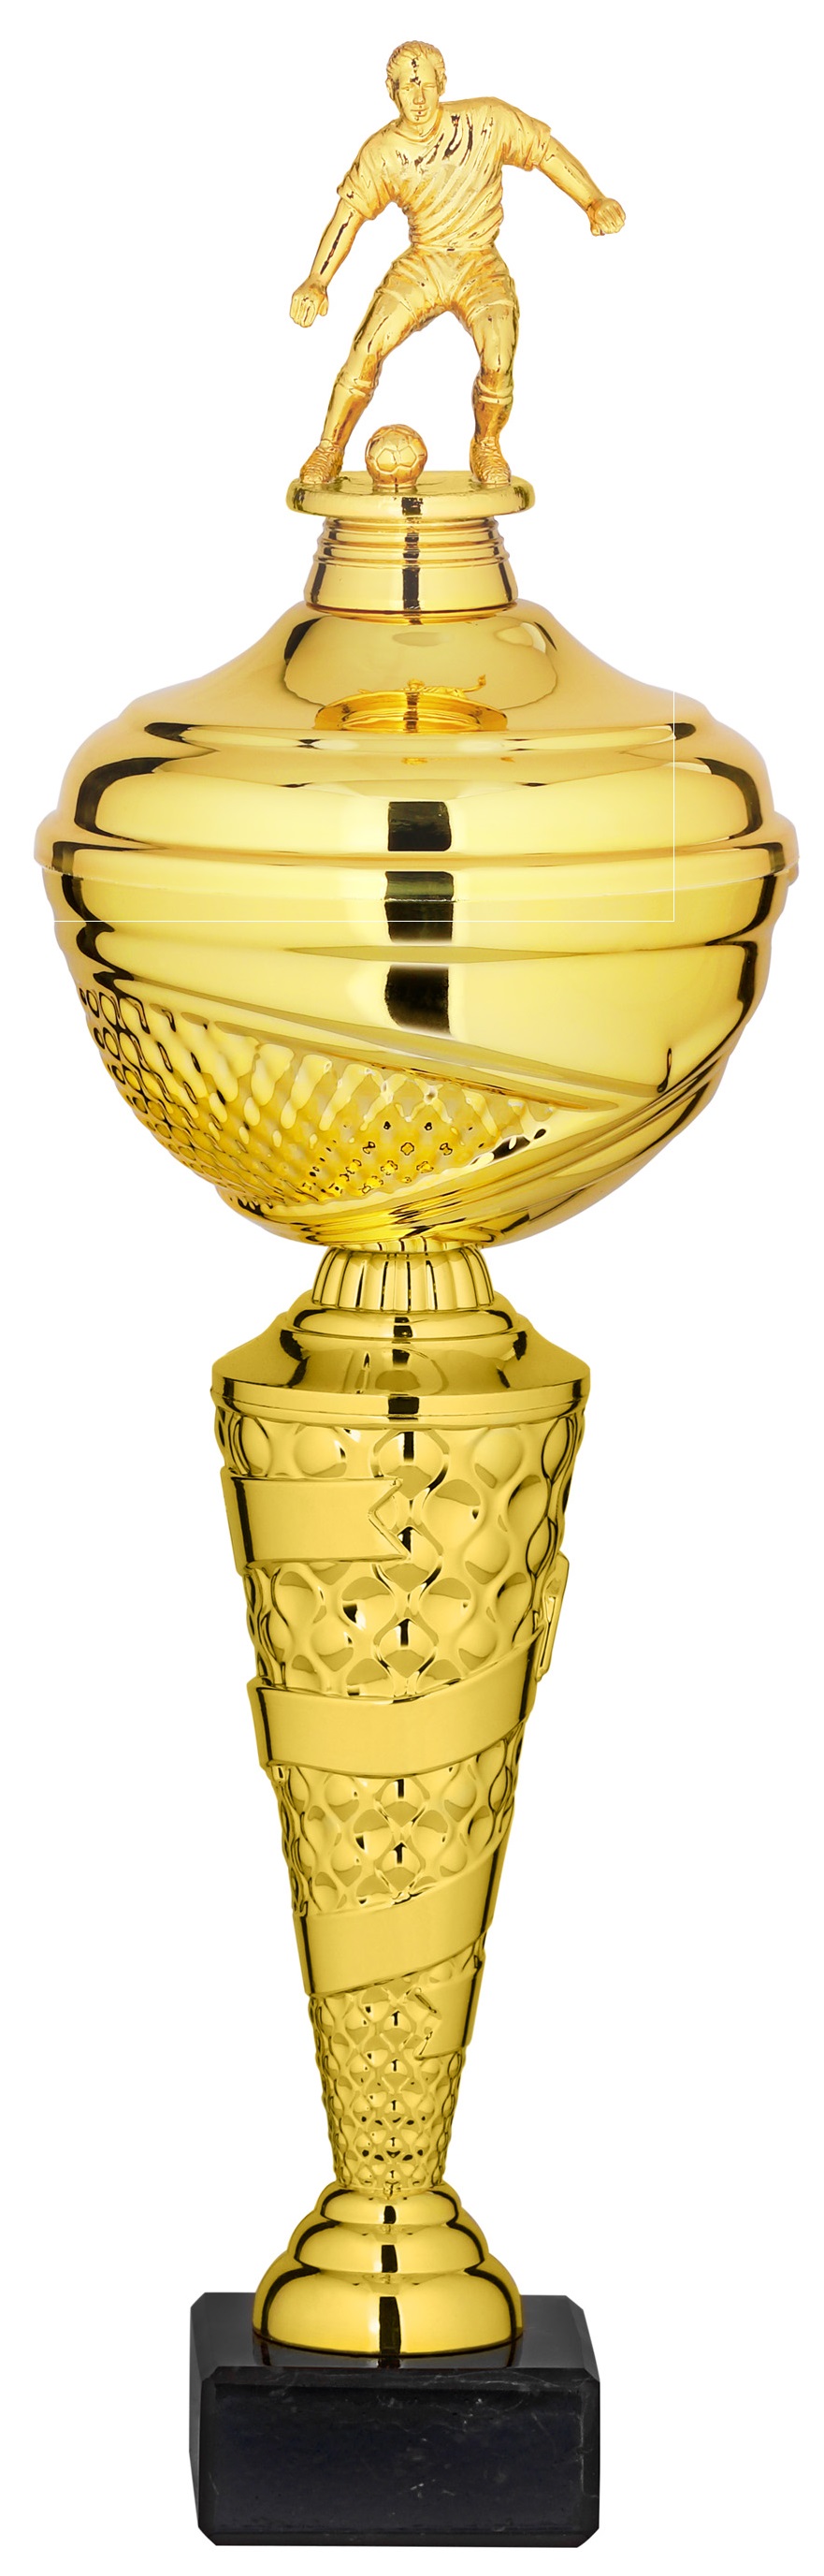 Fußball-Pokal P600-Gold  inkl. Gravur  41,5 cm